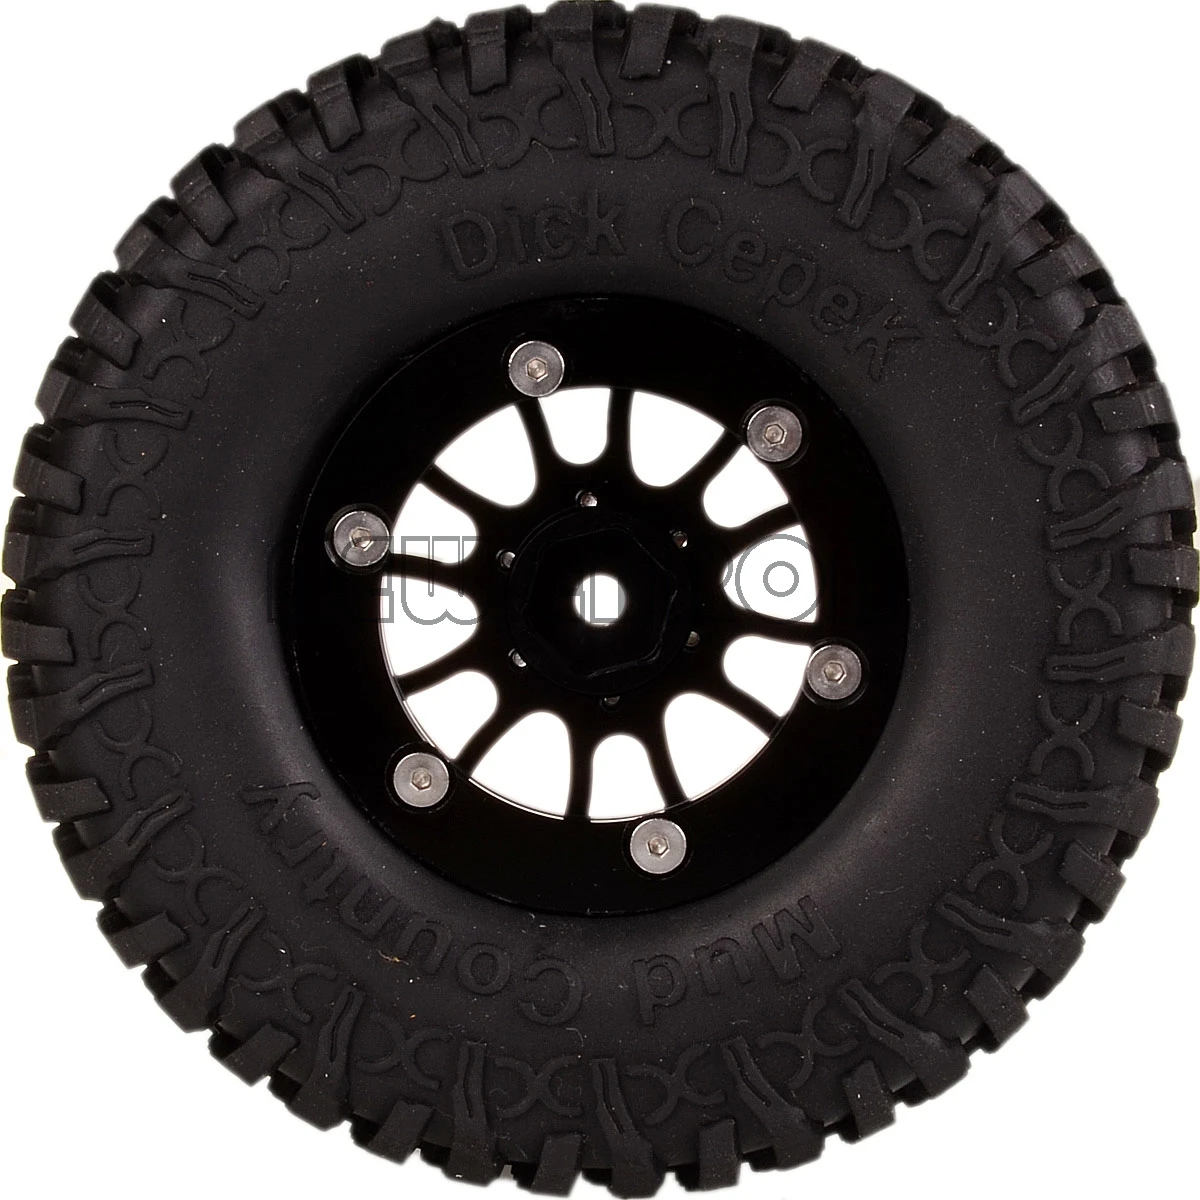 

NEW ENRON 4P 1.9 Inch Wheel Rims & Tires Tires For RC 1/10 Axial HPI HSP 1:10 TRX-4 TRX4 T4 Tamiya CC01 MST jimny TF2 D90 D110